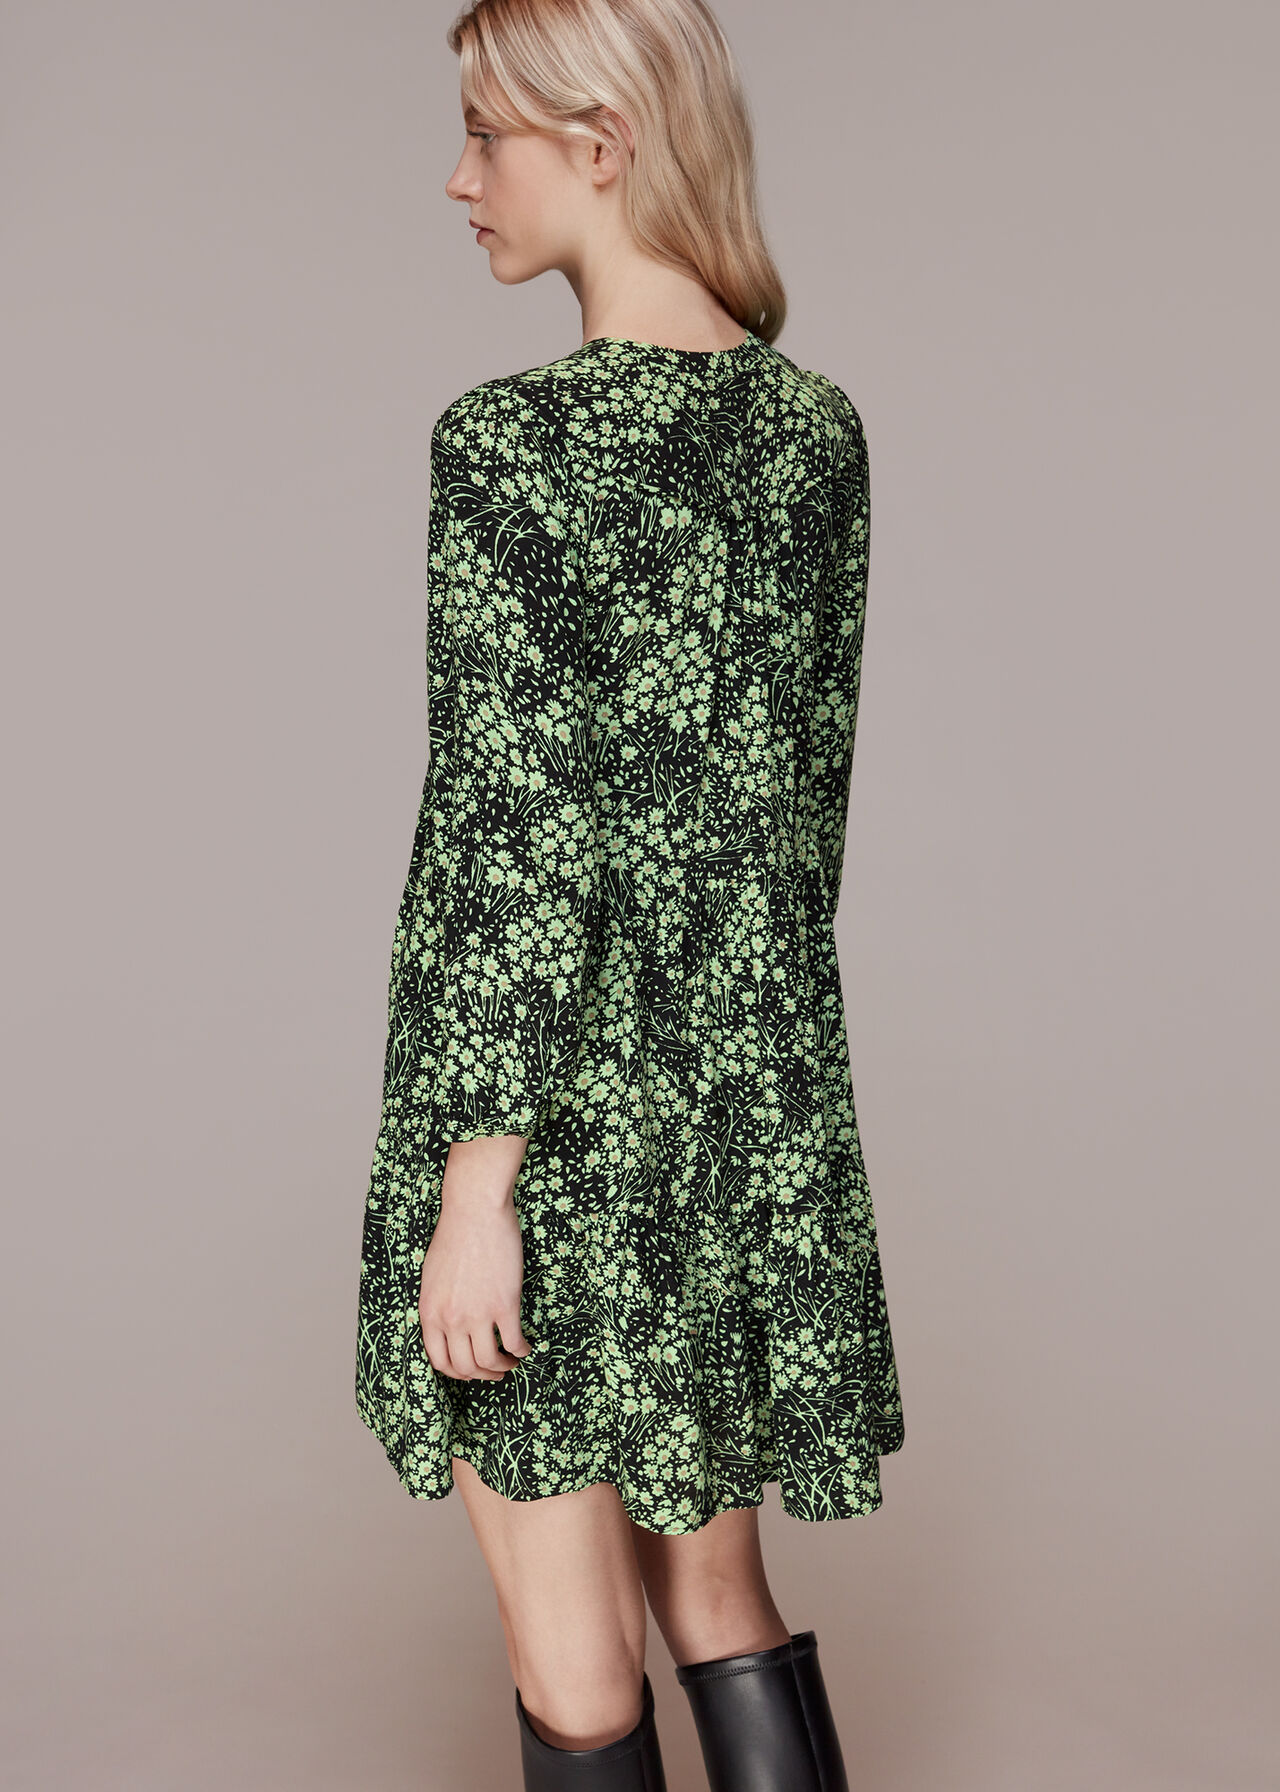 Daisy Meadow Print Dress